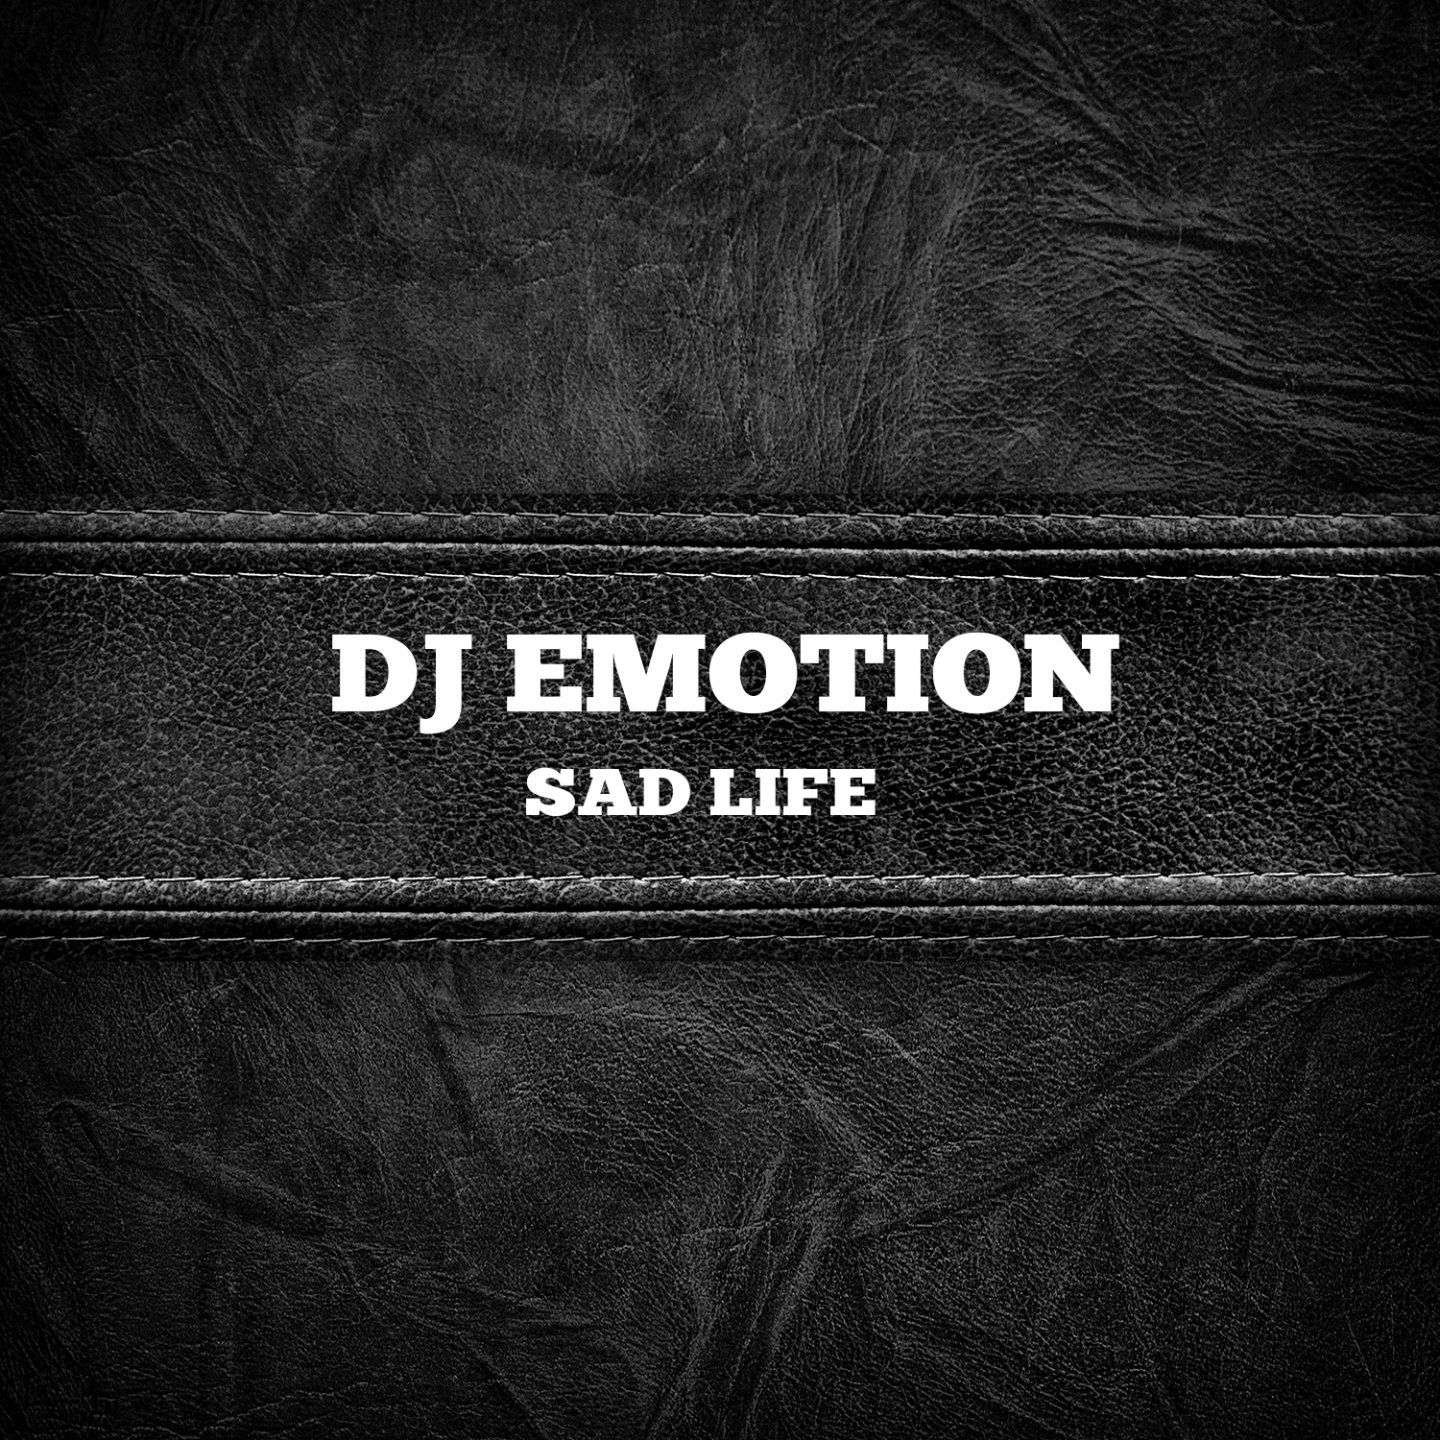 Life is sad. Sad обложка. DJ emotion. DJ emocion. Life Sad mu картинки.